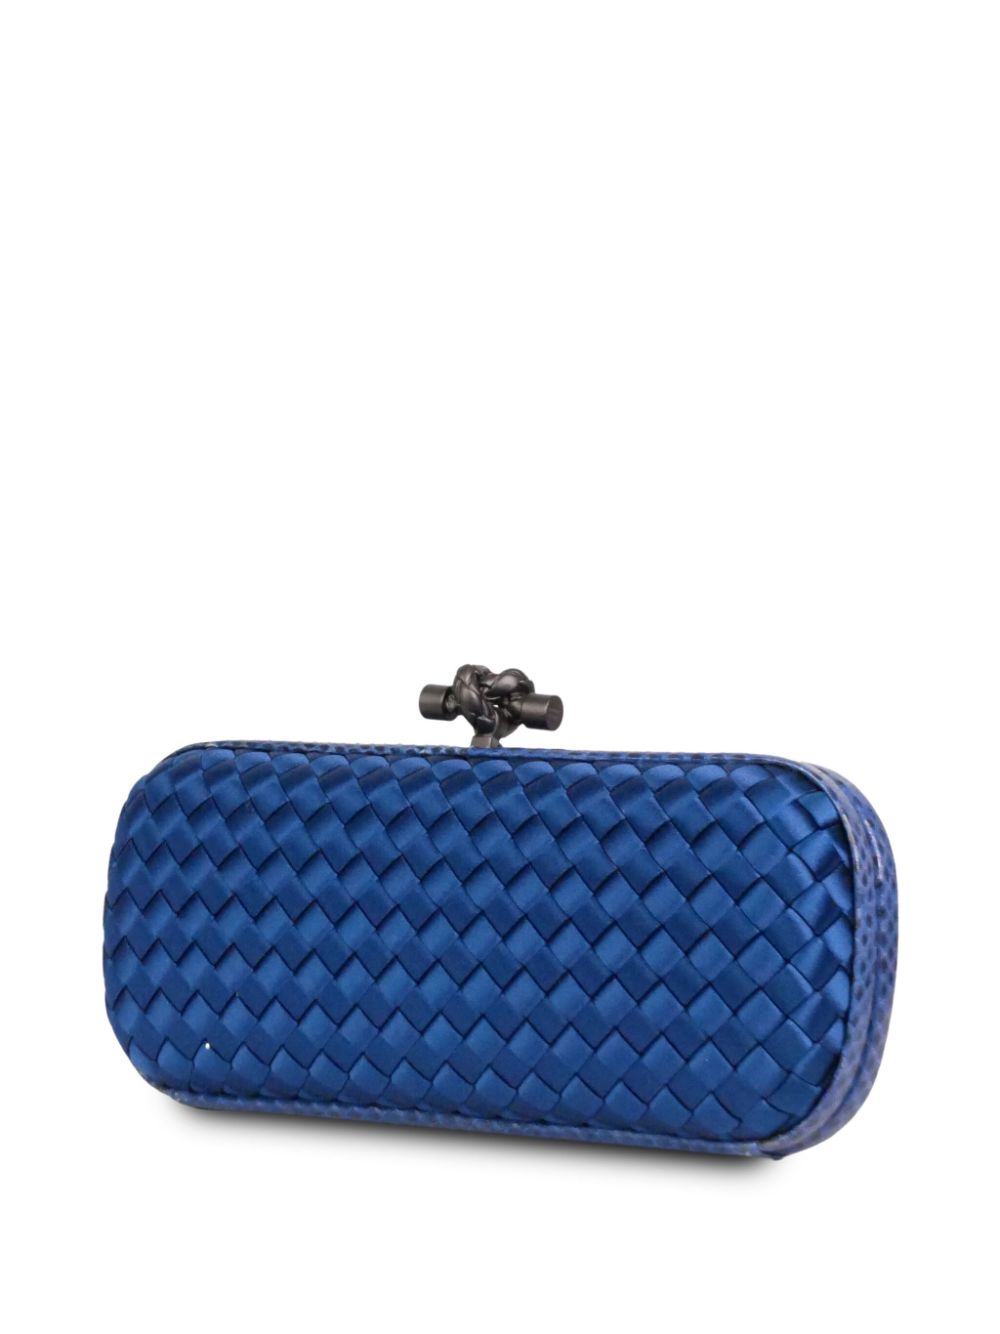 Bottega Veneta Pre-Owned Knot intrecciato leather clutch bag - Blauw